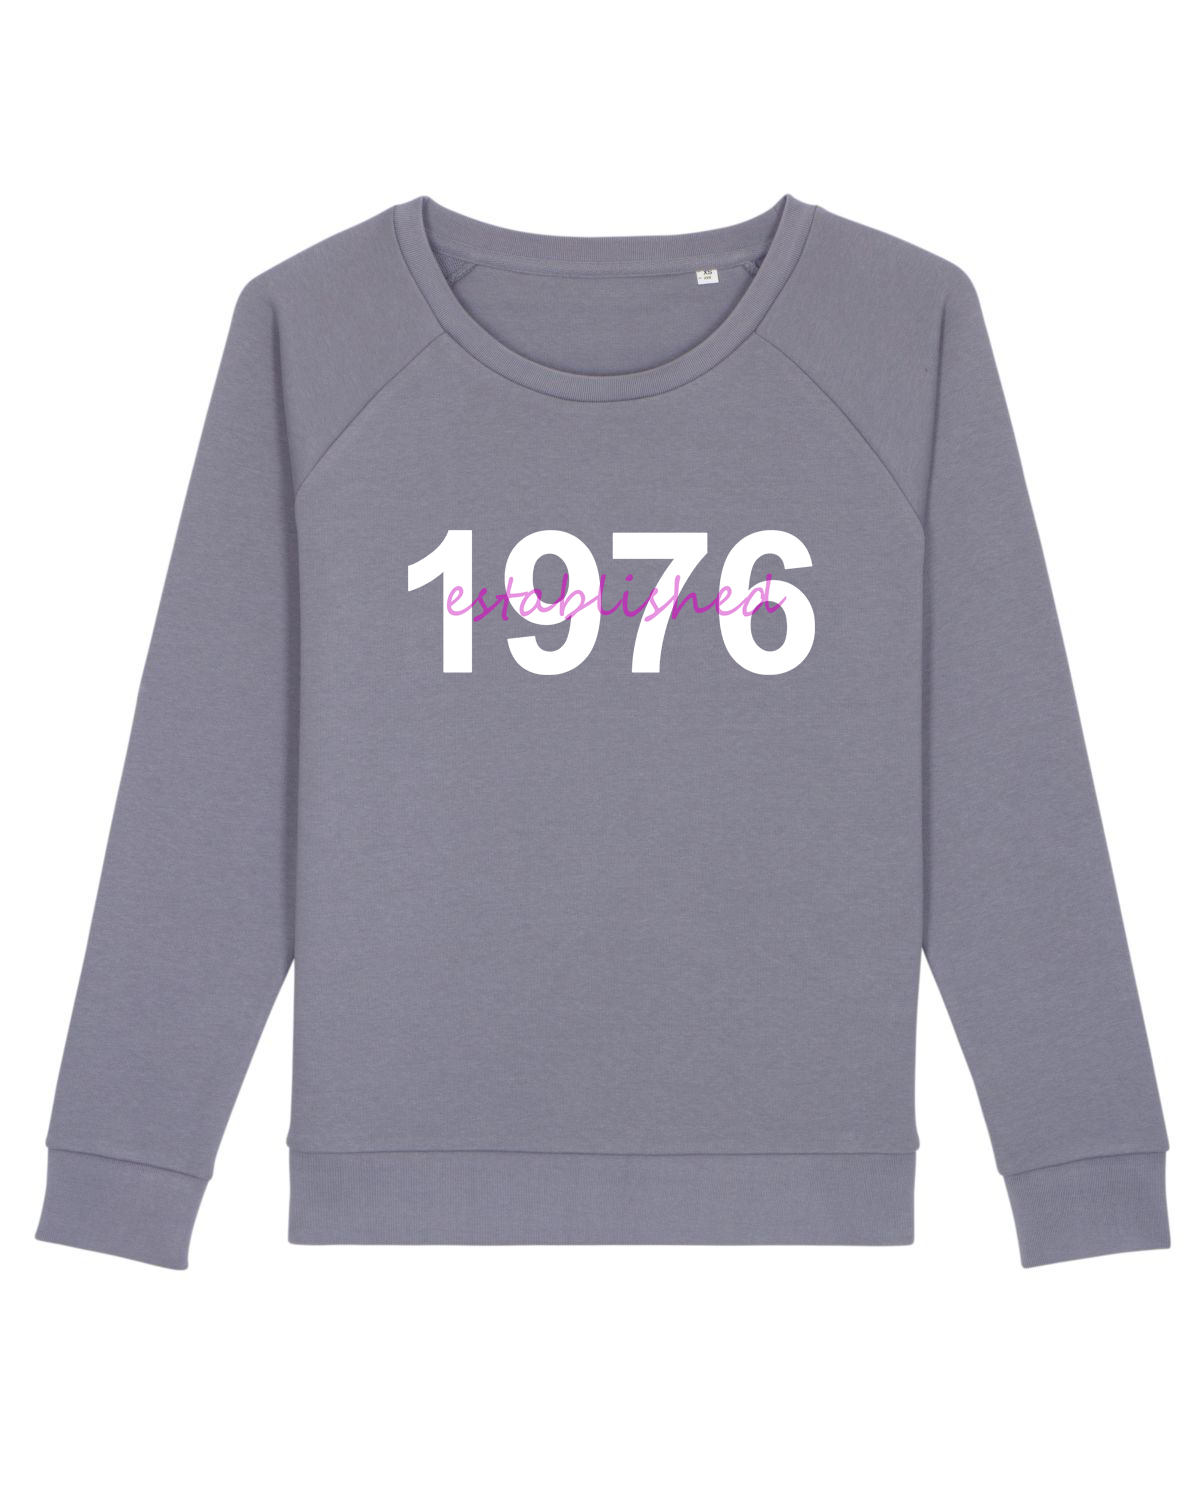 Personalised Established Year Sweater